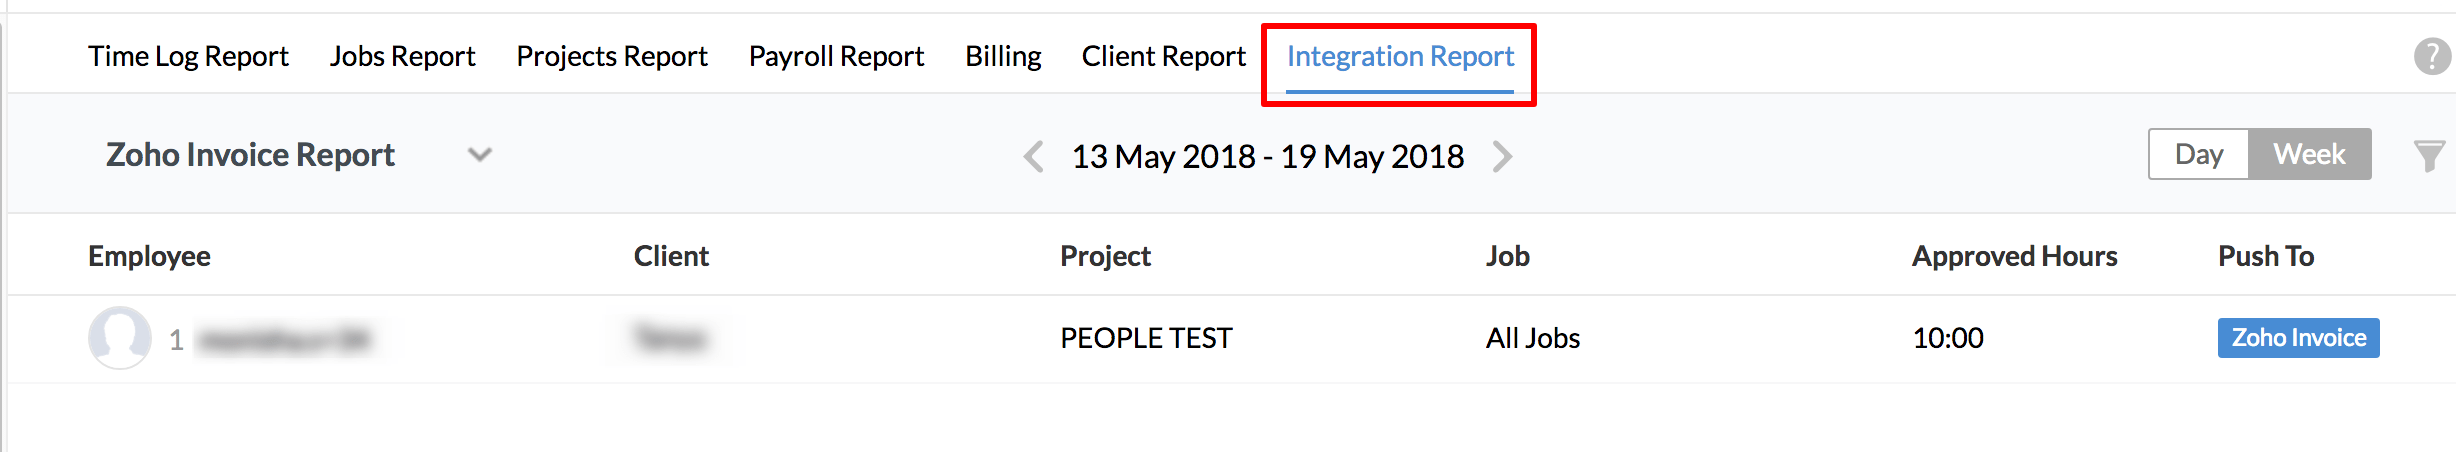 Integration Reports